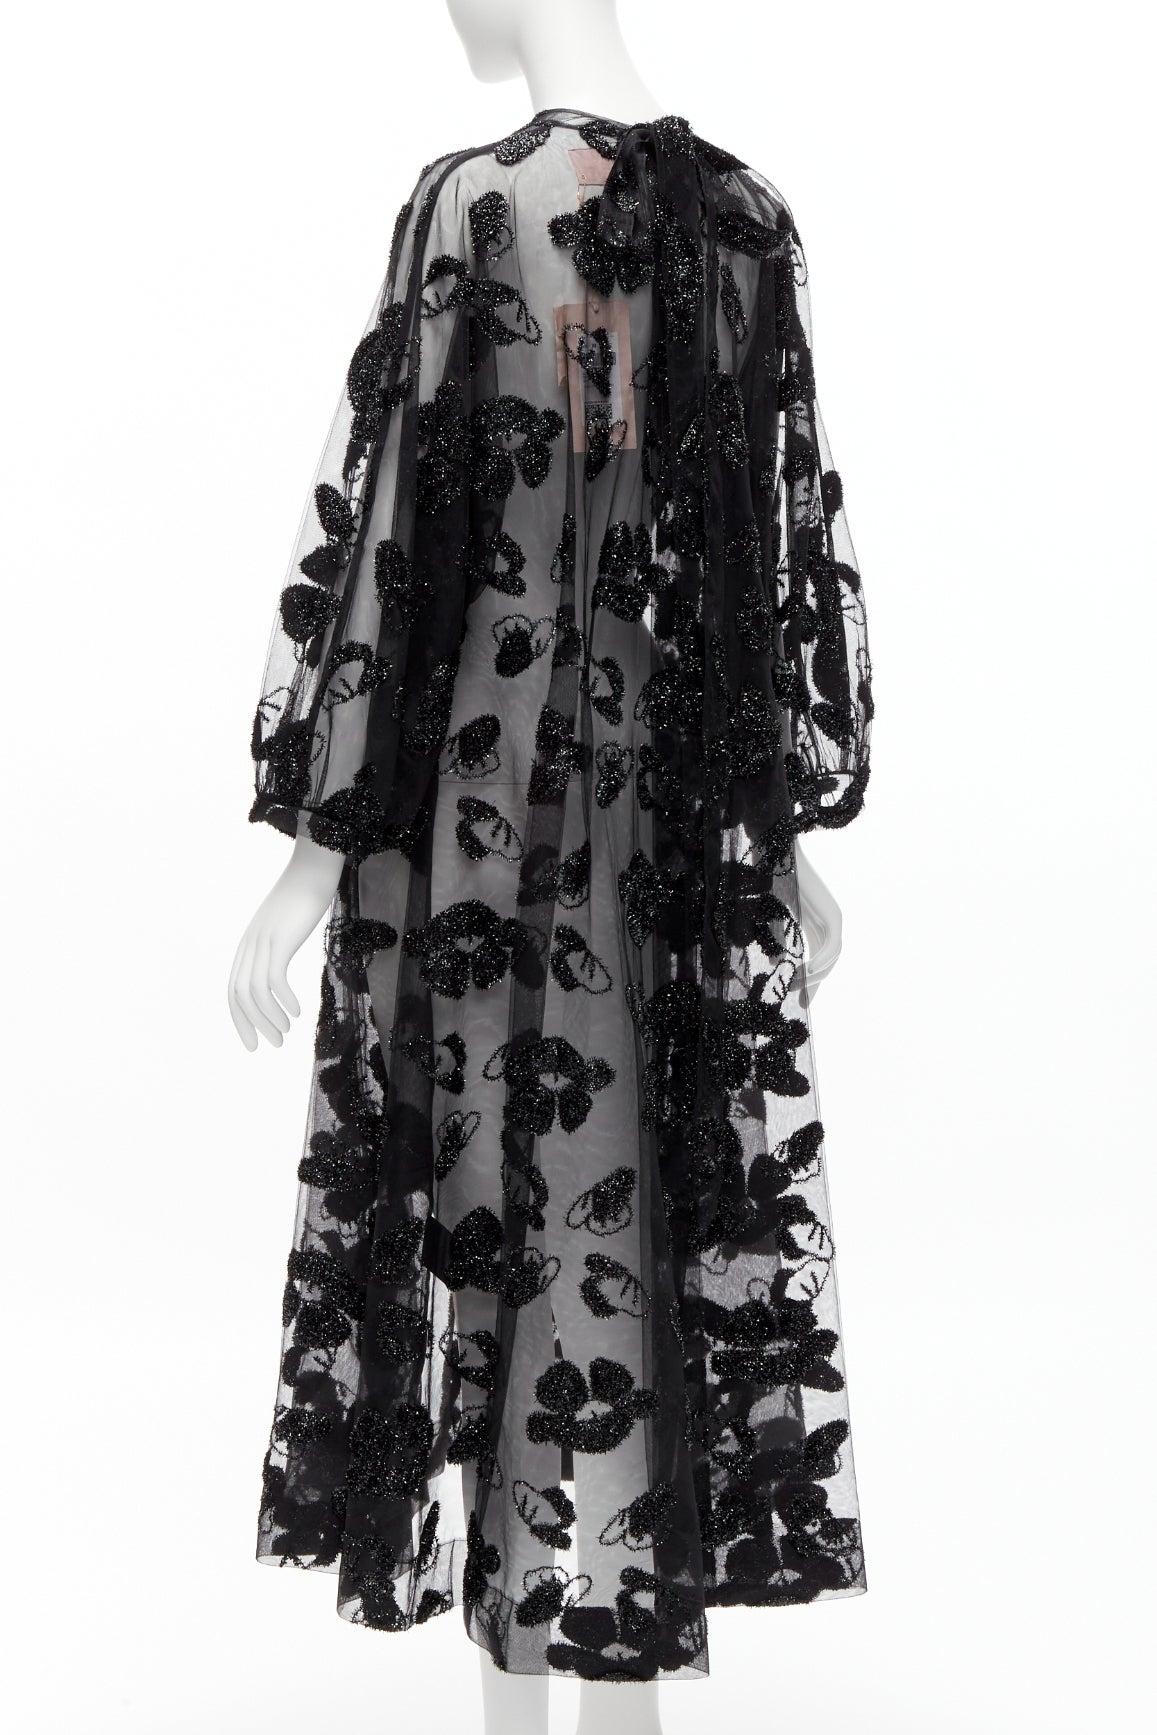 new SIMONE ROCHA H&M tinsel floral embroidery sheer dolman midi dress UK6 XS 2